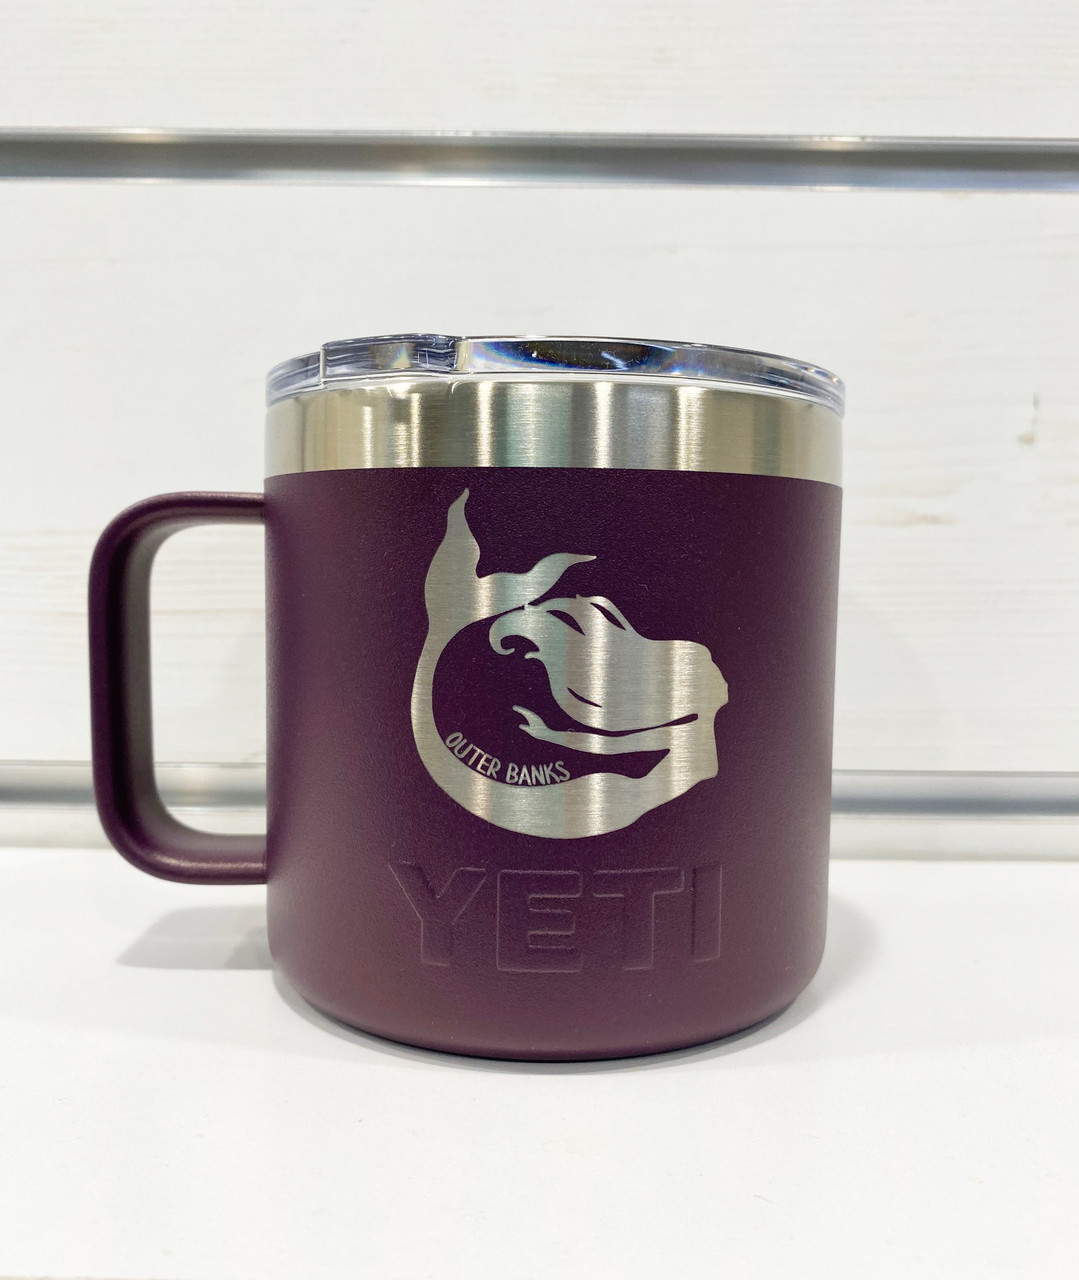 REAL YETI 14 oz. Laser Engraved Nordic Purple Stainless Steel Yeti Rambler  Mug with Mag Slider Lid Personalized Vacuum Insulated YETI